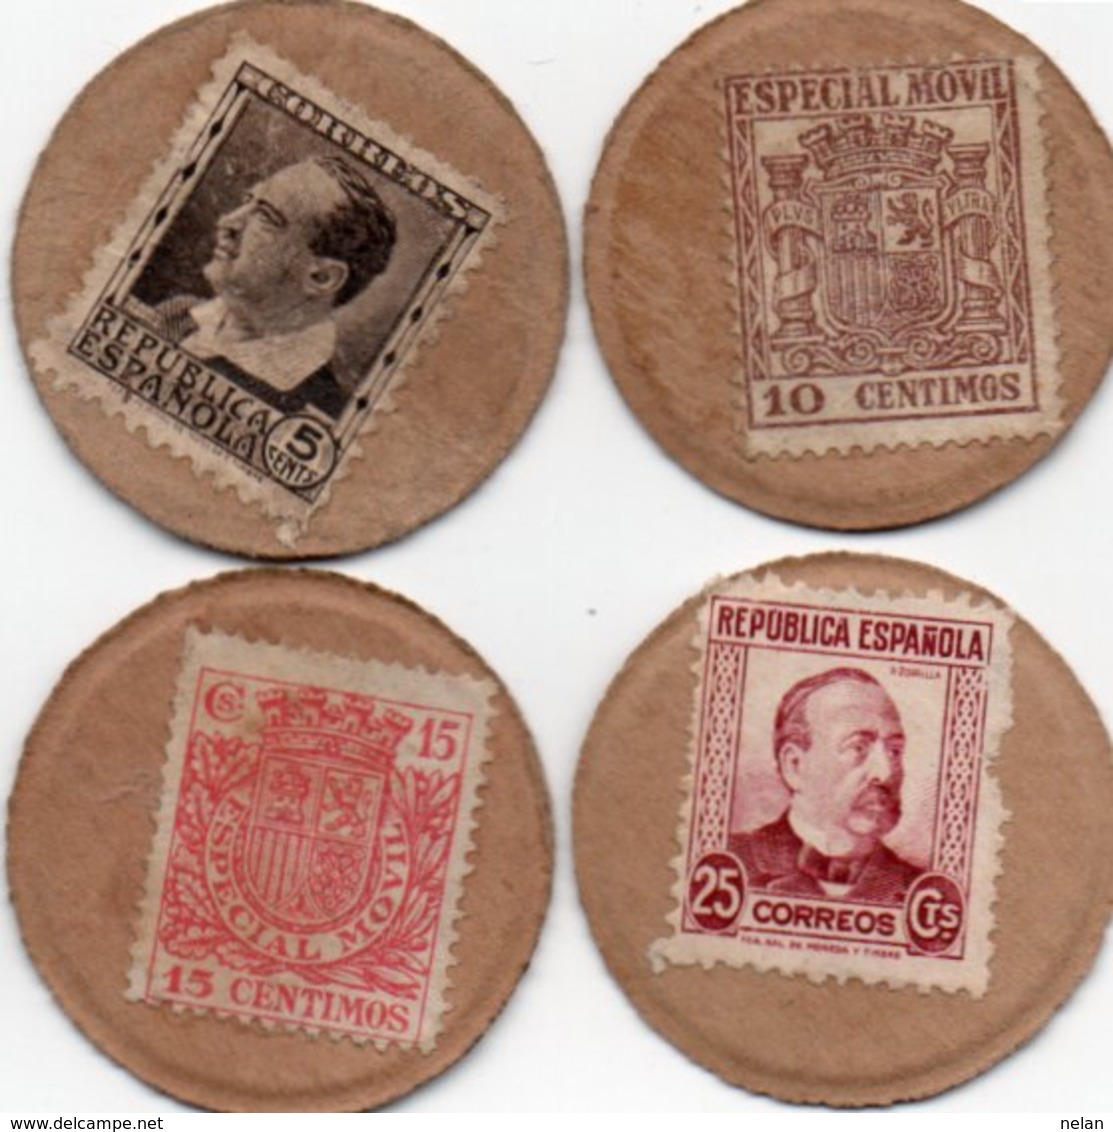 SPAGNA 5,10,15,25 CENTIMOS 1938 P-96 F,I,P,R (PERFETTE CONDIZIONI)Spagna, Fábrica Nacional De Moneda Y Timbre - FNMT - Verzamelingen